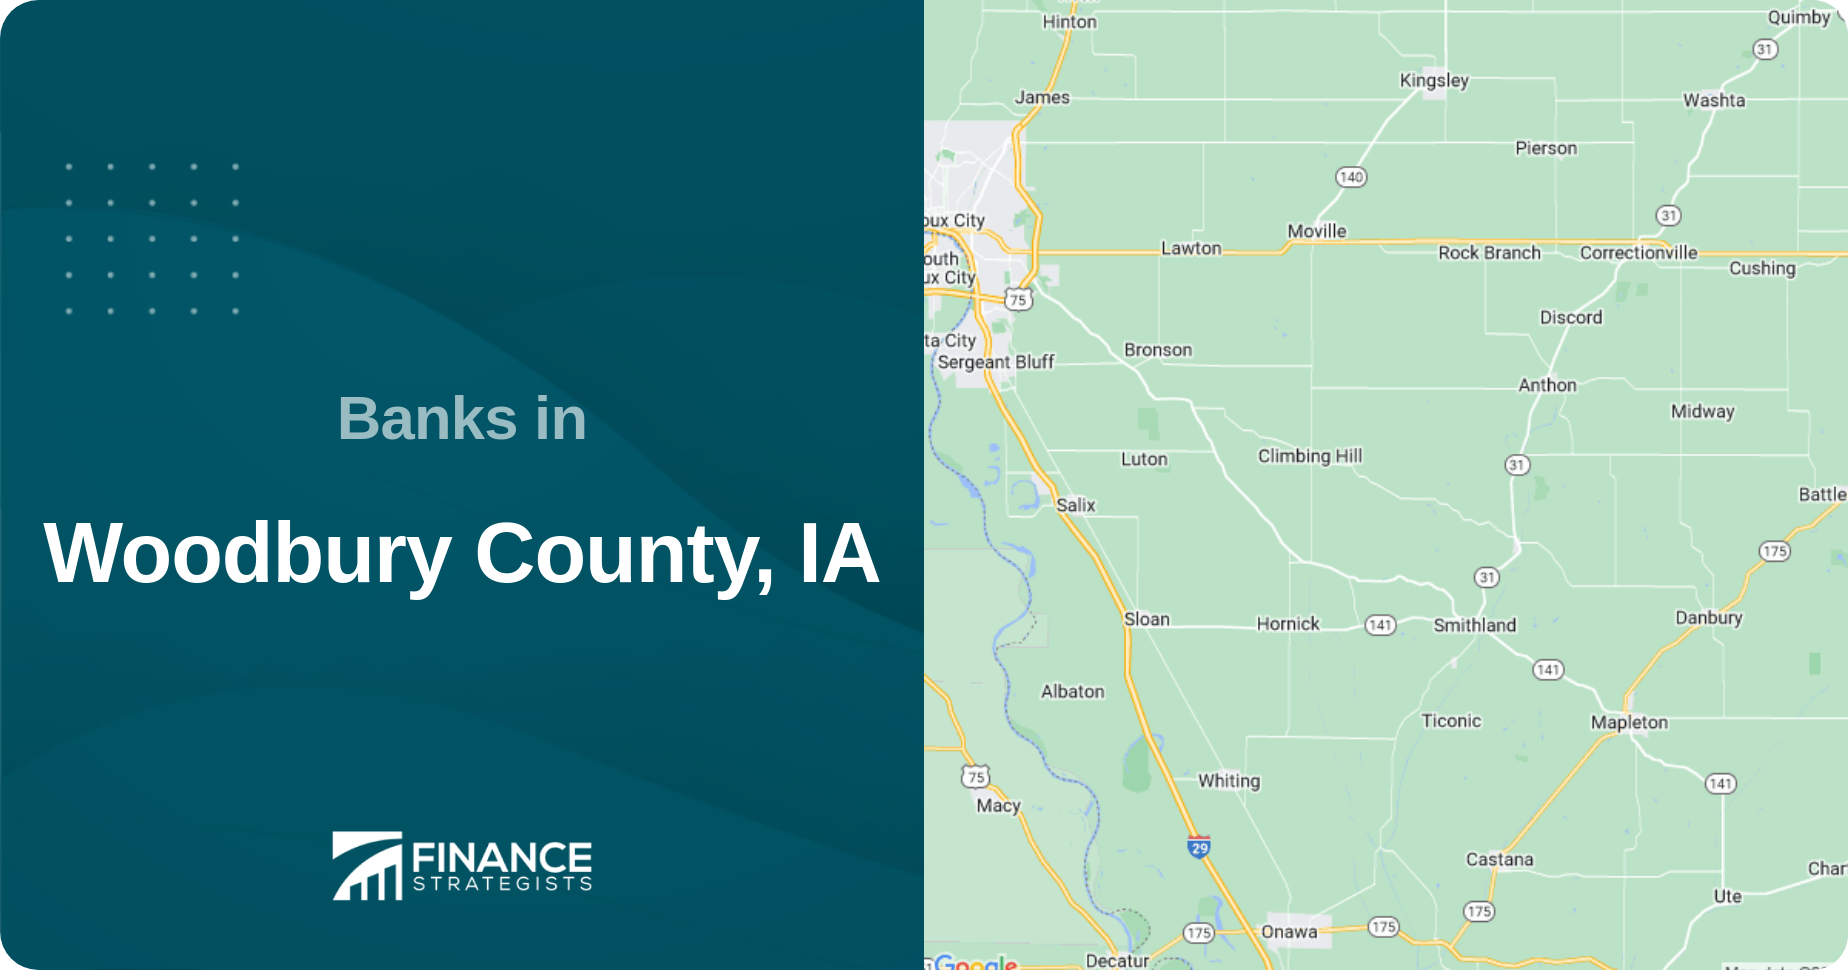 Banks in Woodbury County, IA